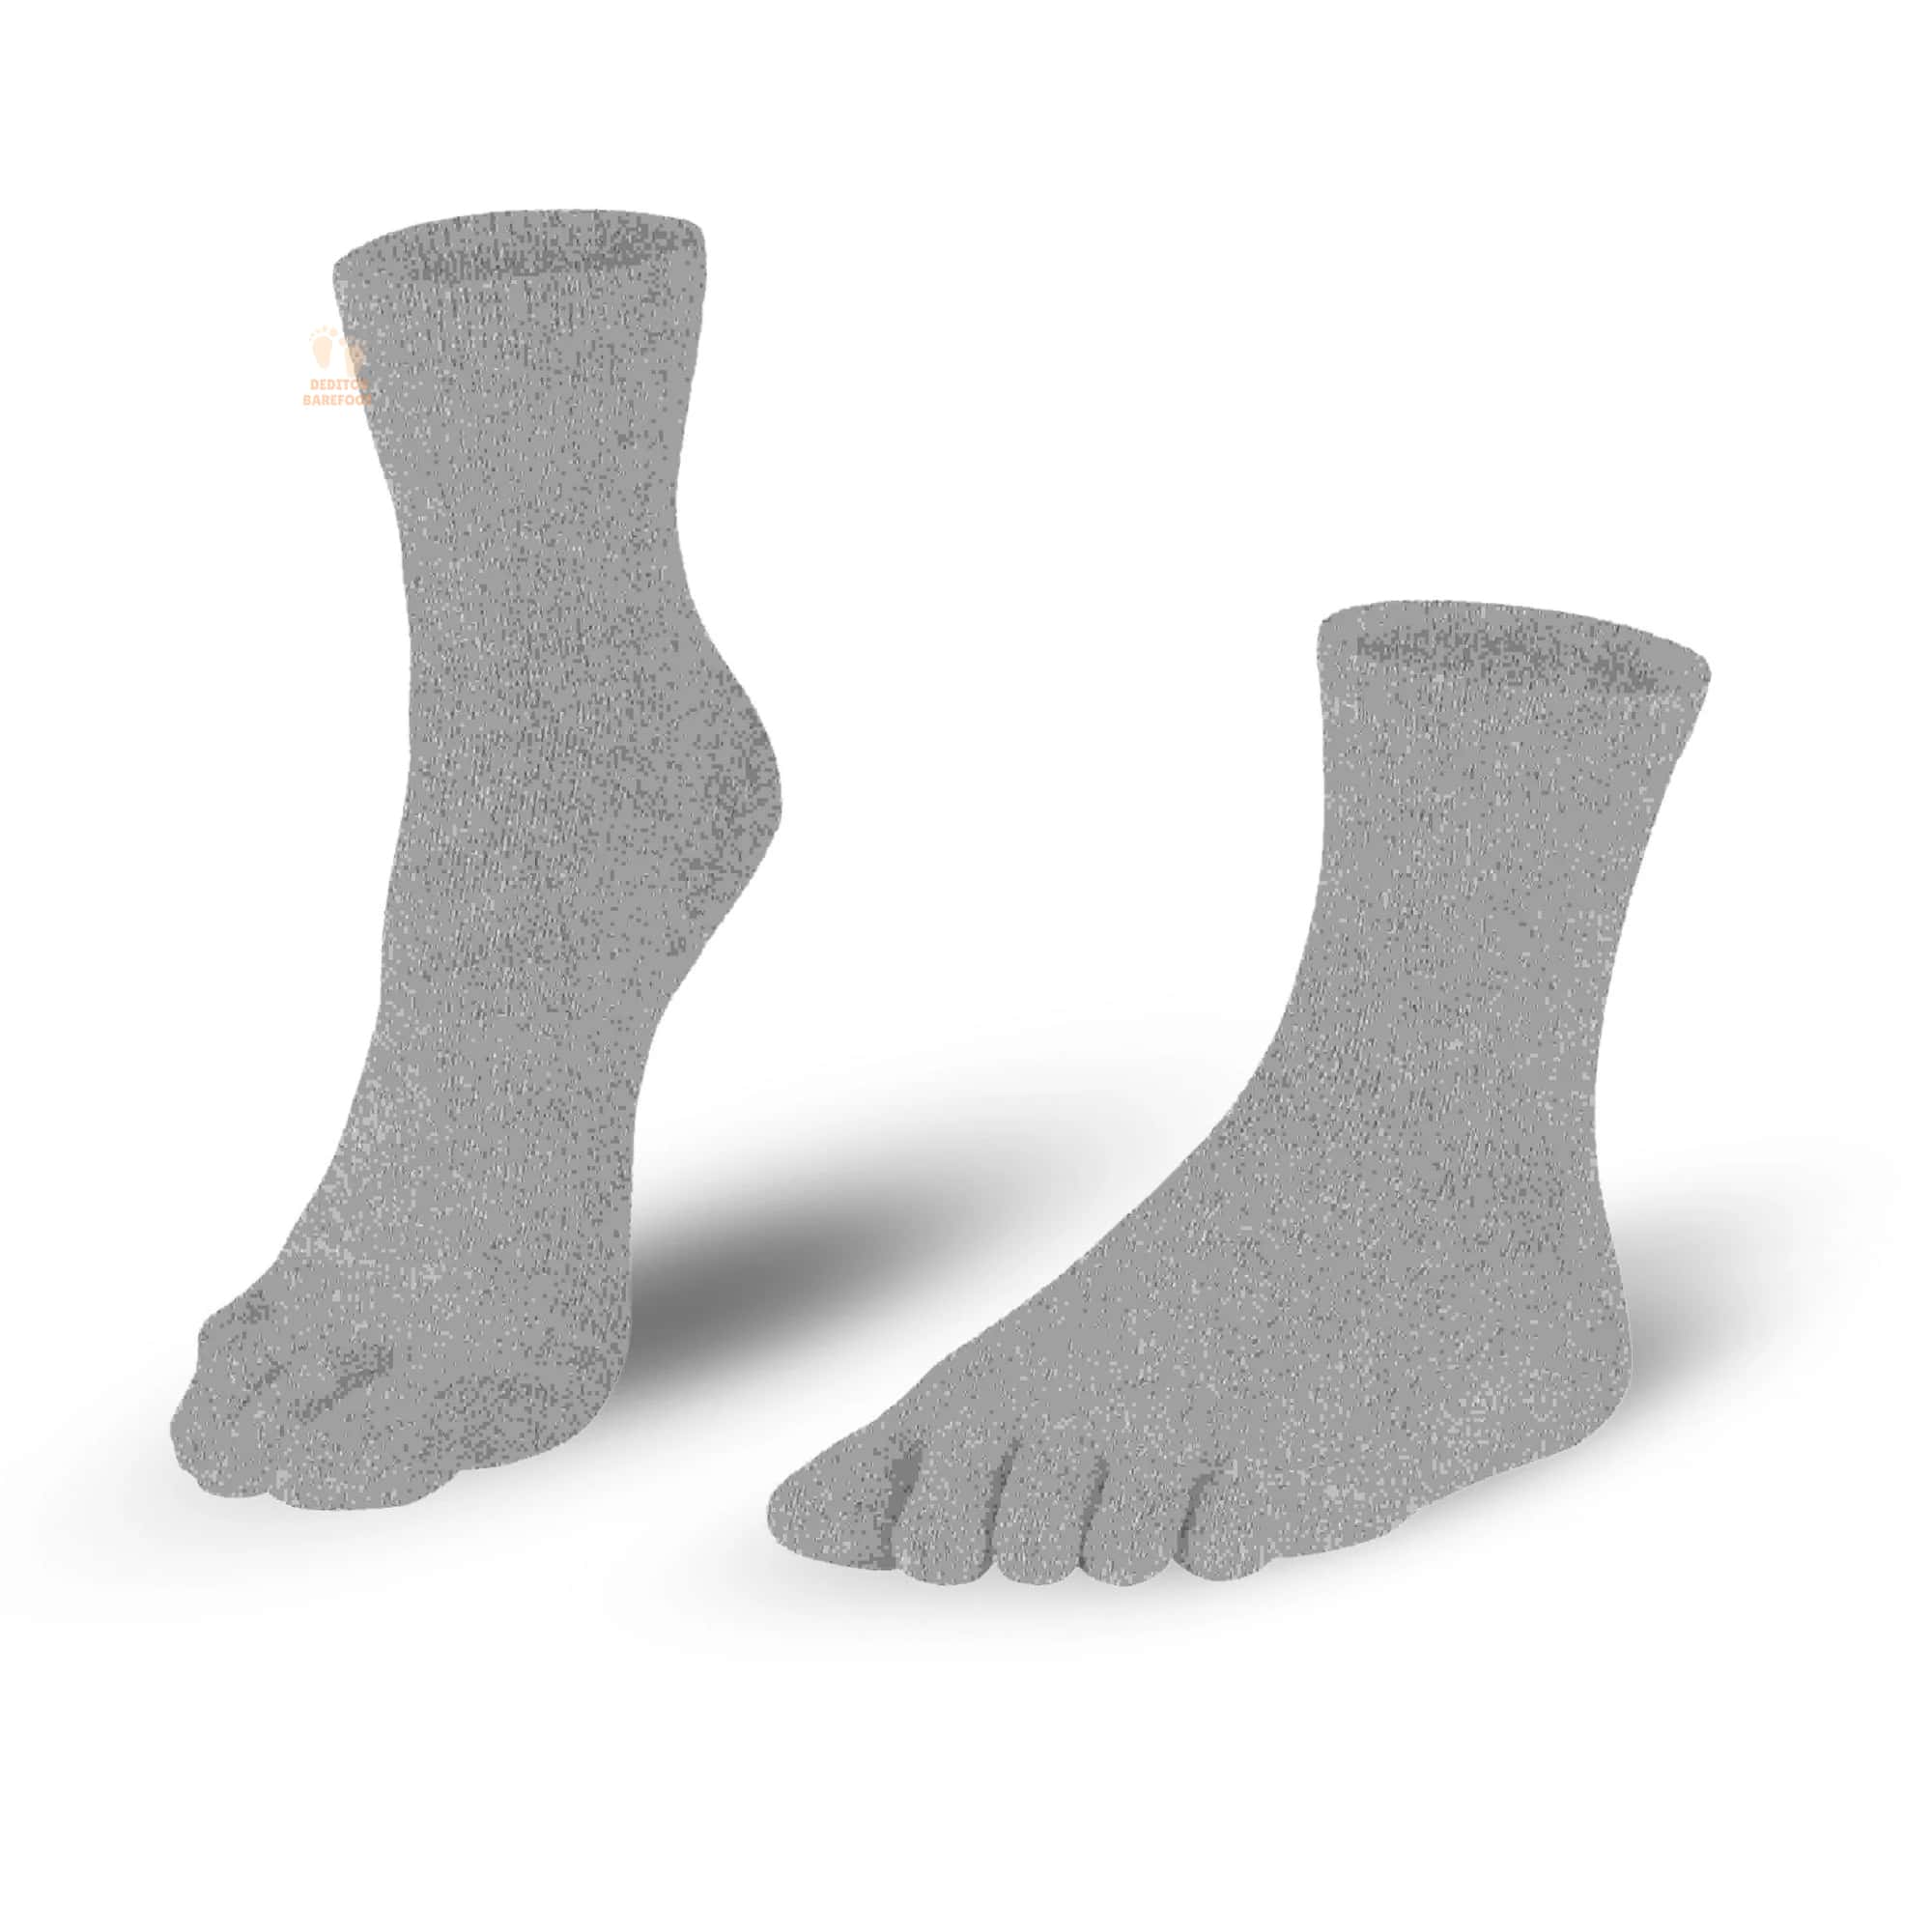 Barefoot calcetines - Crew - Essentials - Black